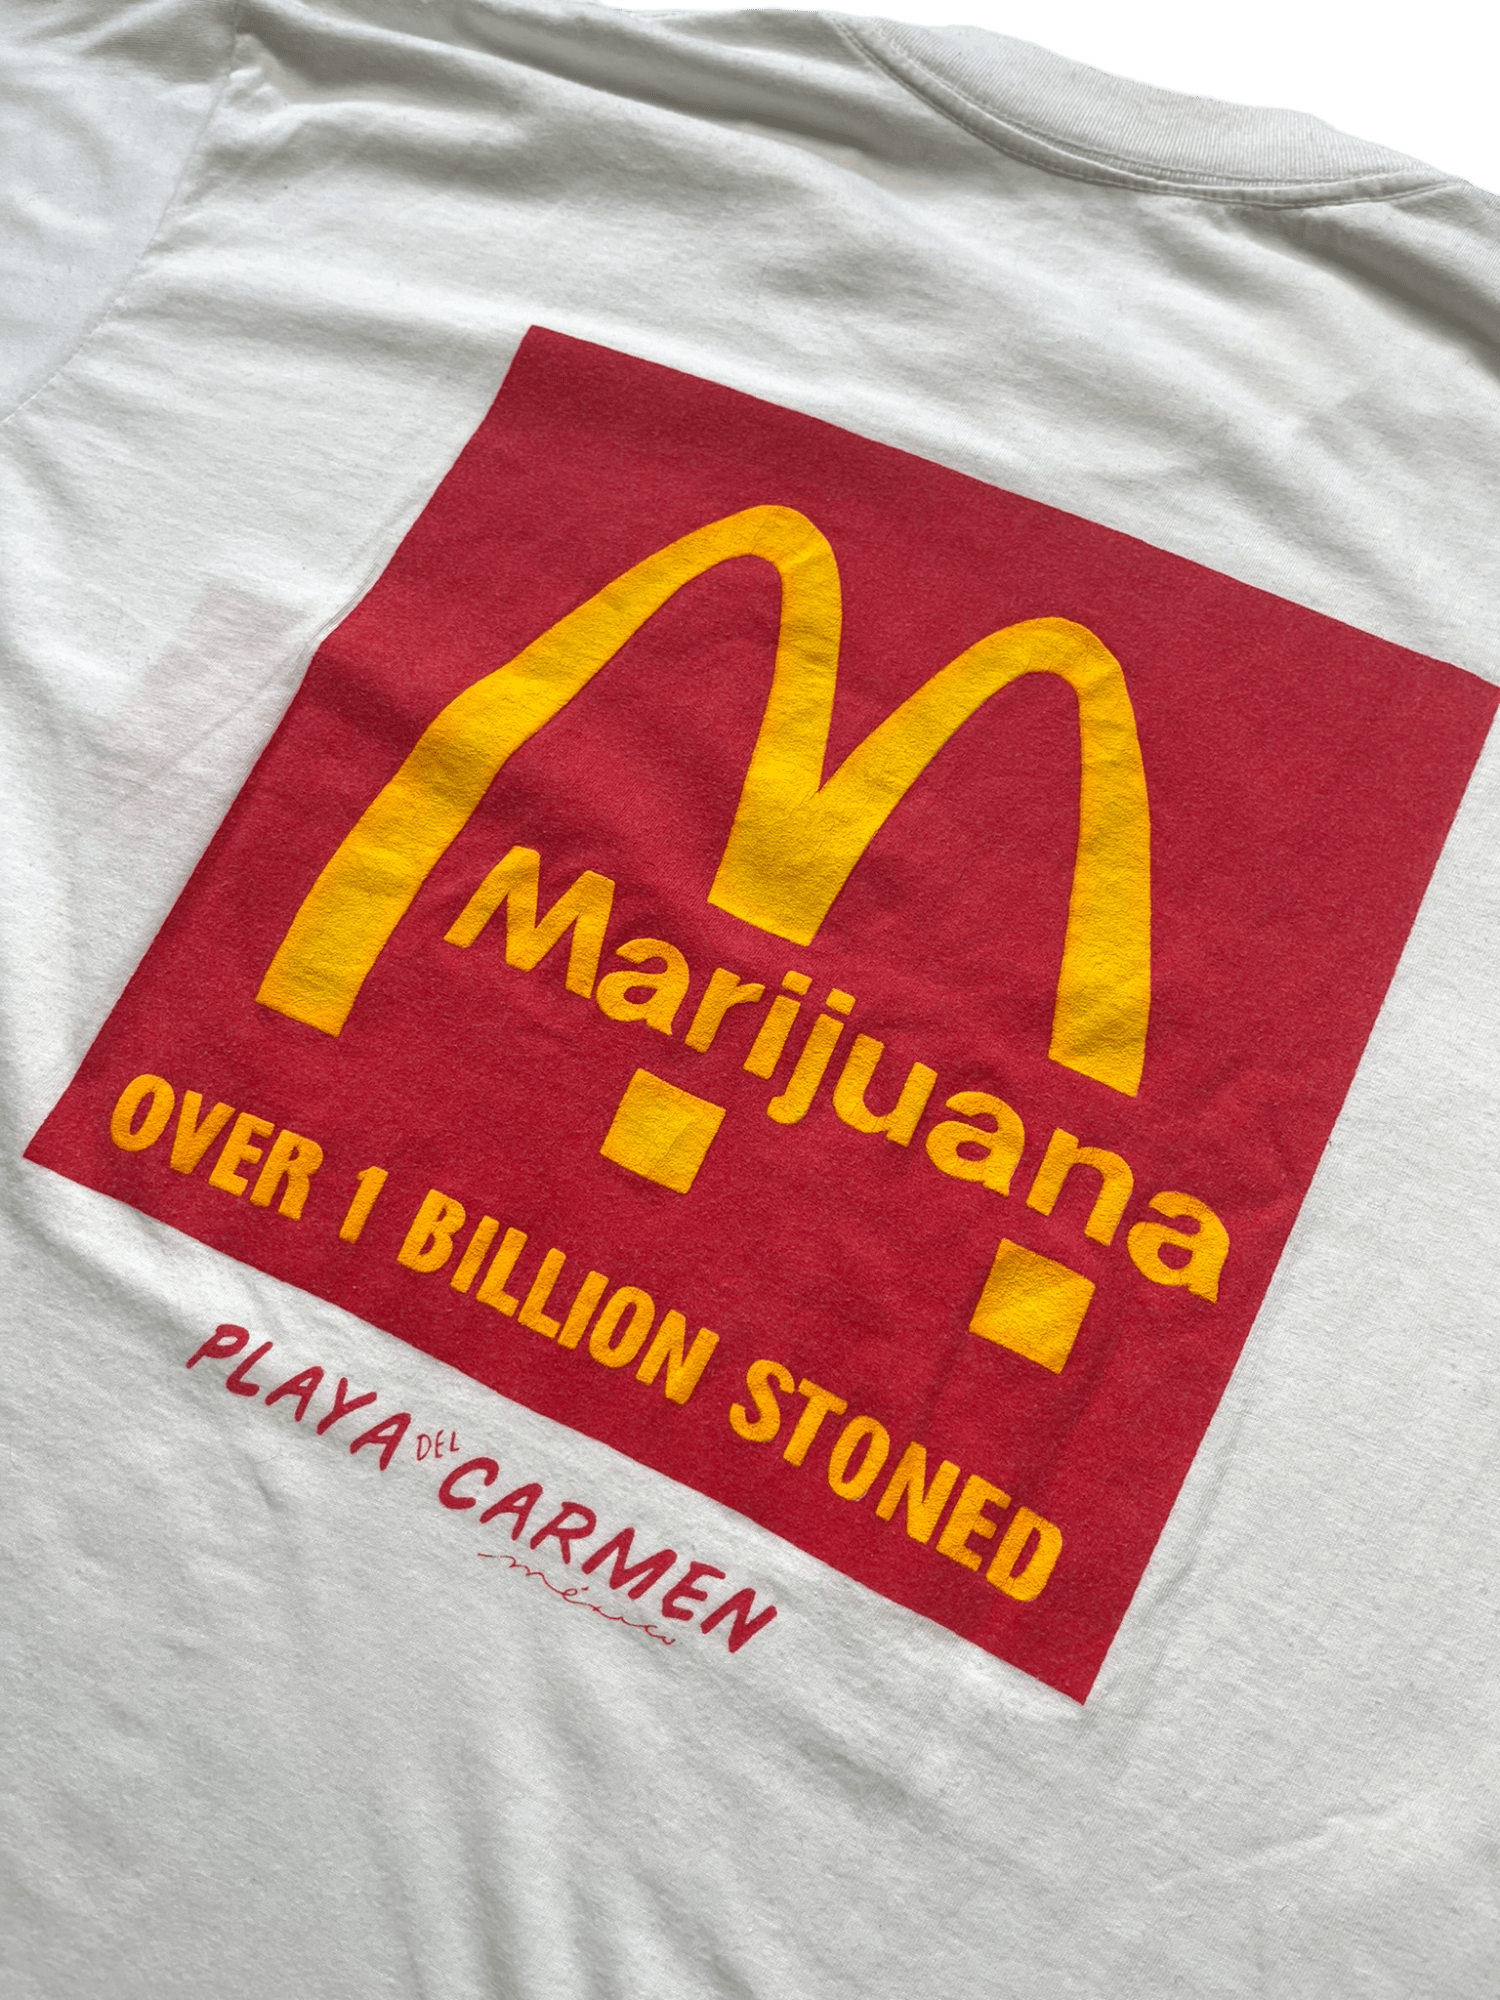 The Vintage Racks T-Shirt Marijuana, over 1 billion stoned - XL